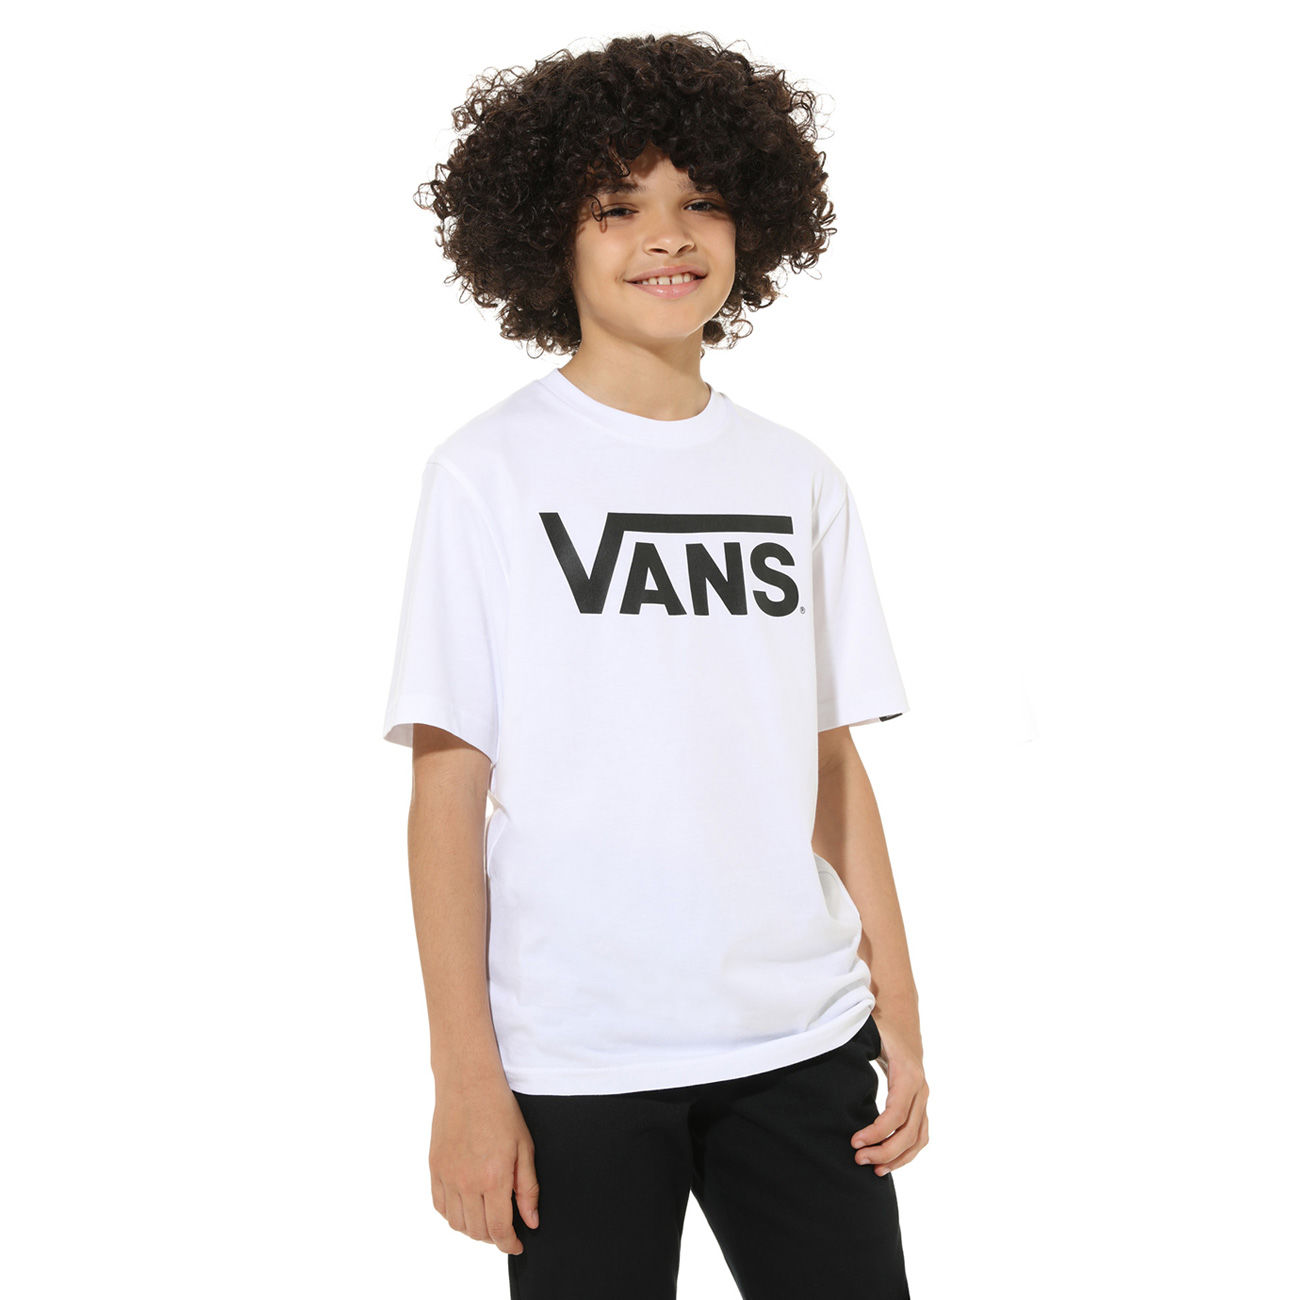 VANS CLASSIC LOGO T-SHIRT Boy White Black | Mascheroni Store